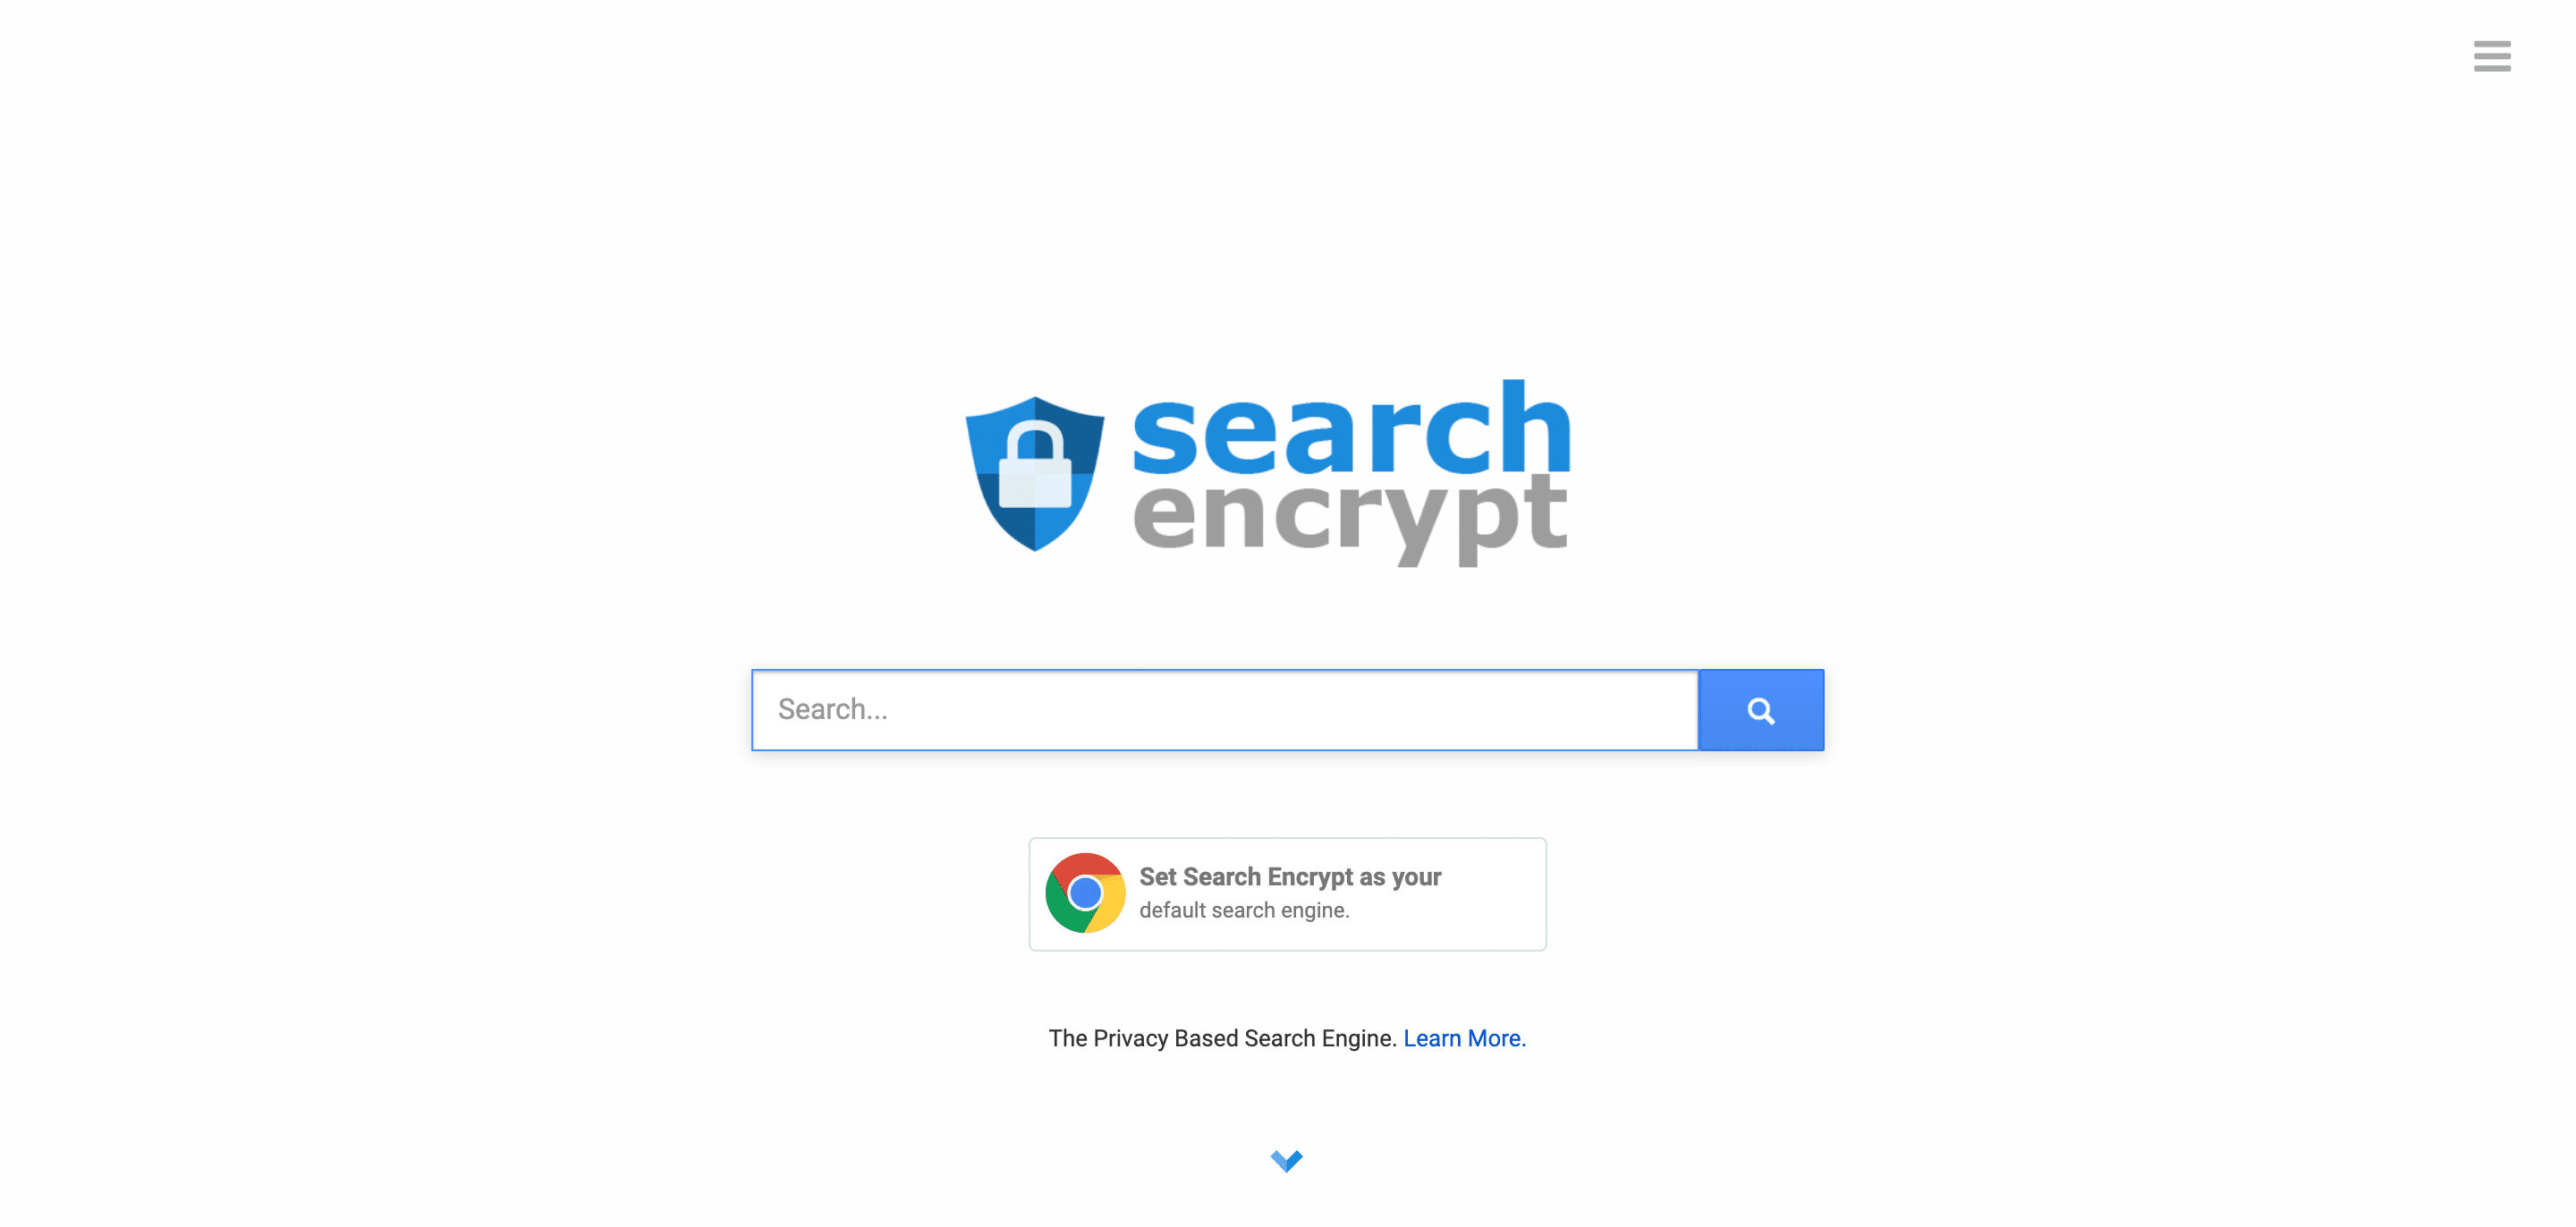 Busque un motor de búsqueda encriptado